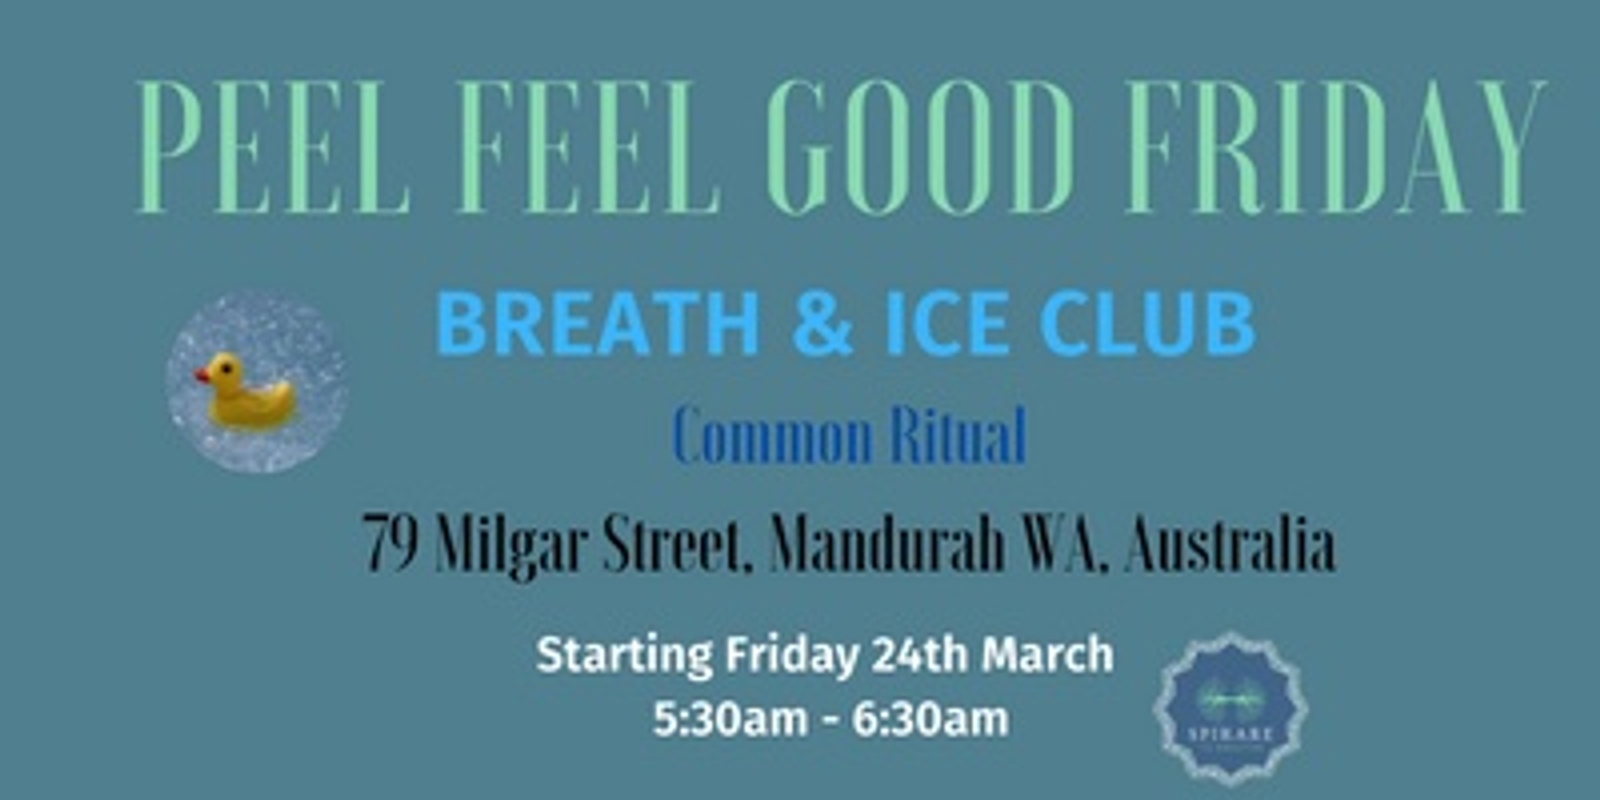 Peel Feel Good Friday - Breath & Ice Club